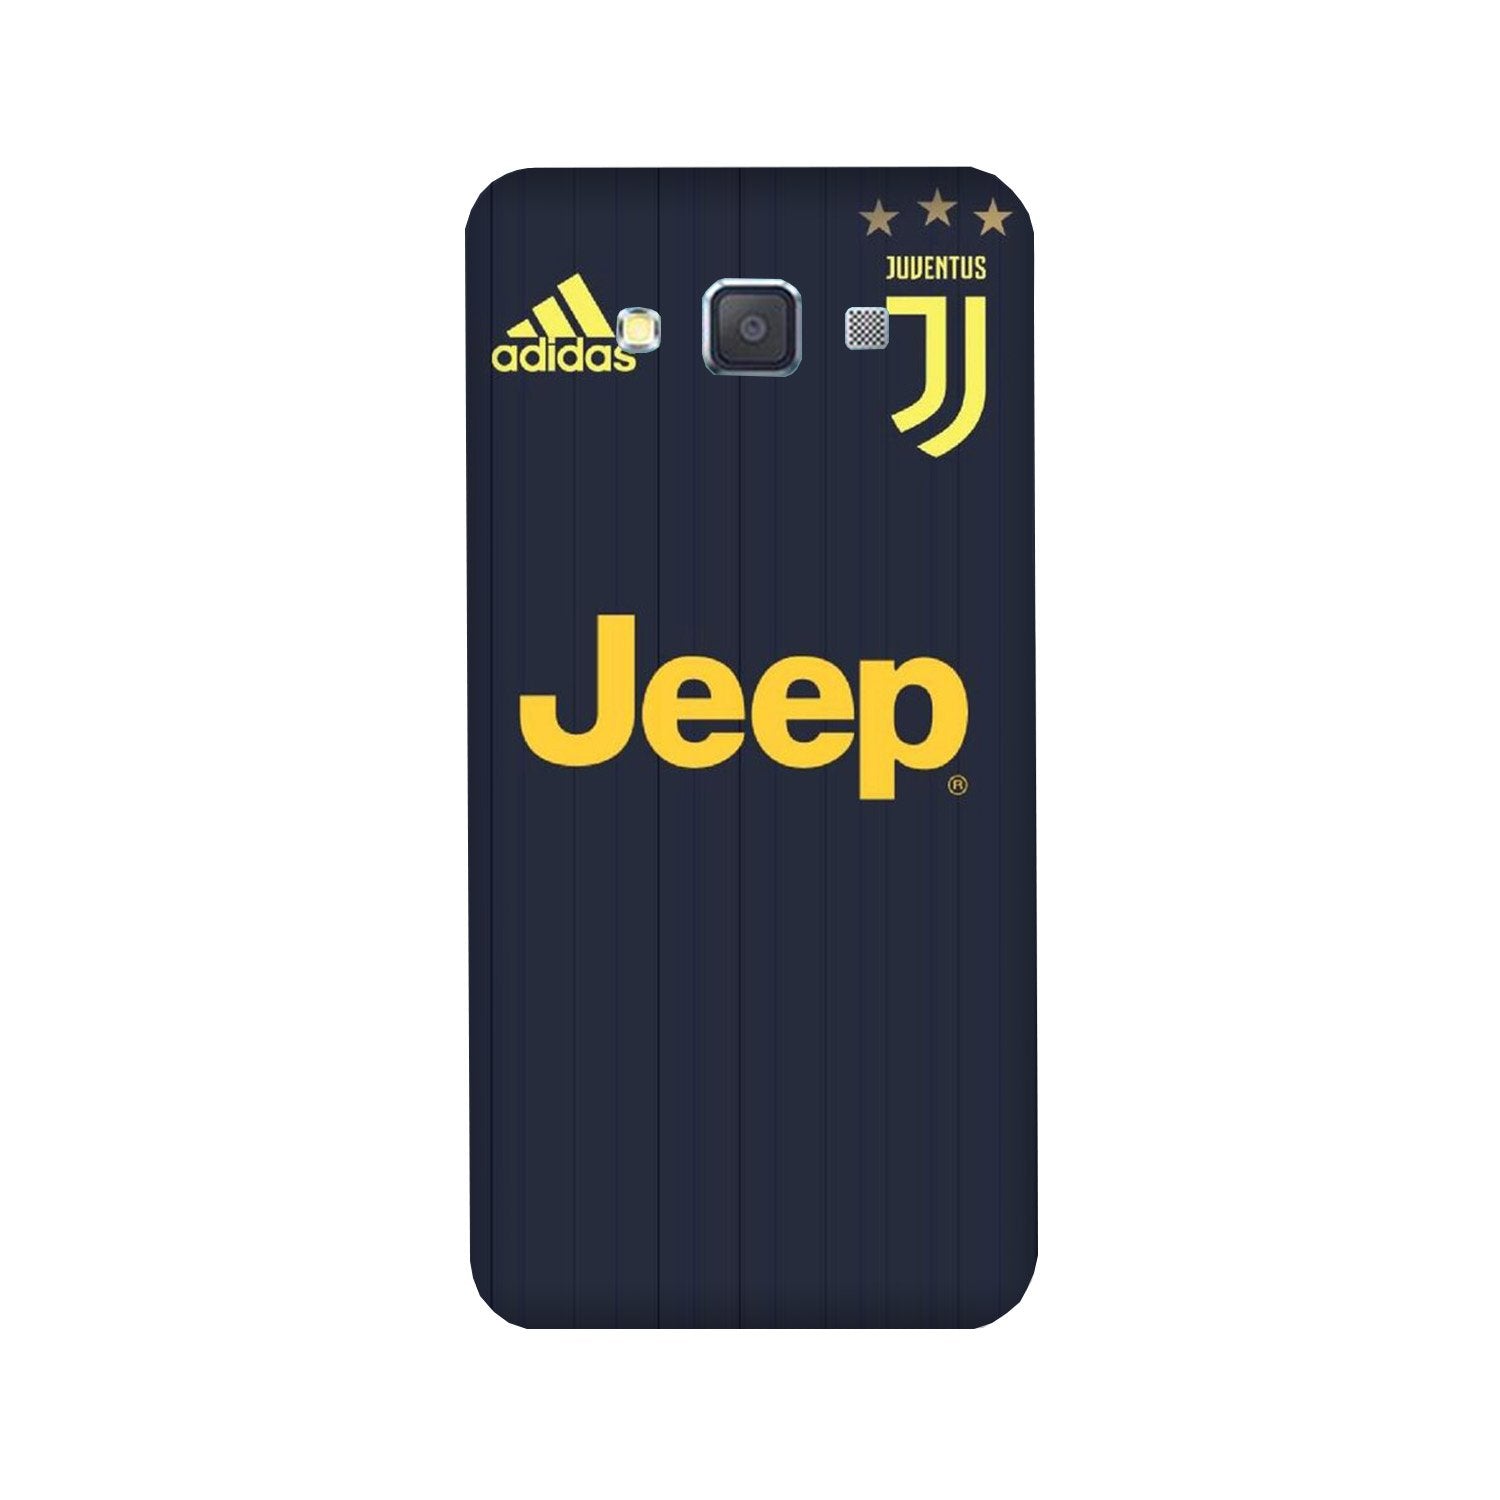 Jeep Juventus Case for Galaxy J5 (2016)  (Design - 161)